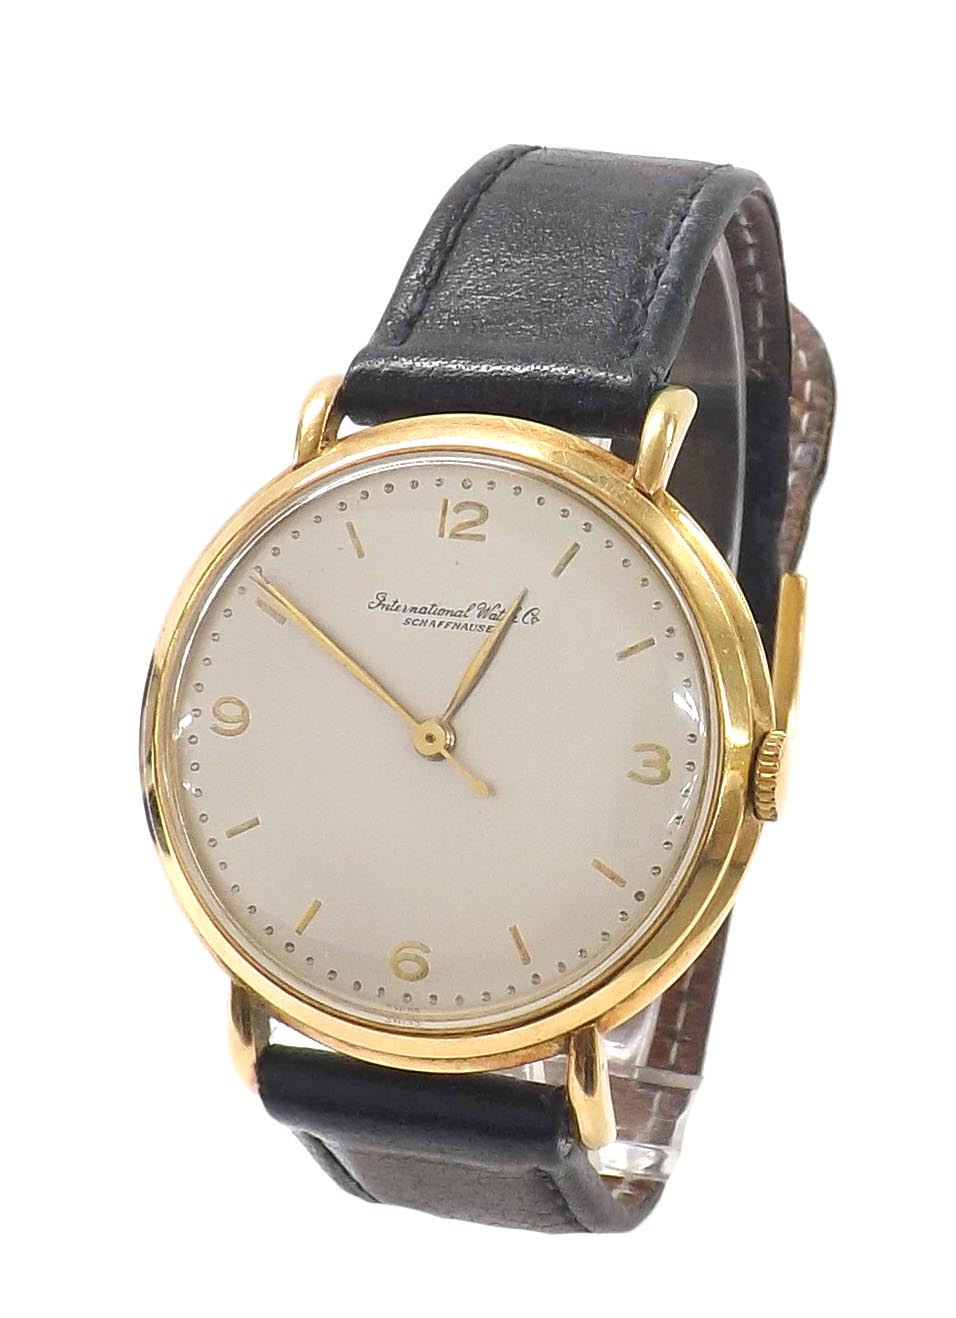 IWC 18ct gentleman's wristwatch, circa 1950s, silvered dial with Arabic quarter numerals, baton